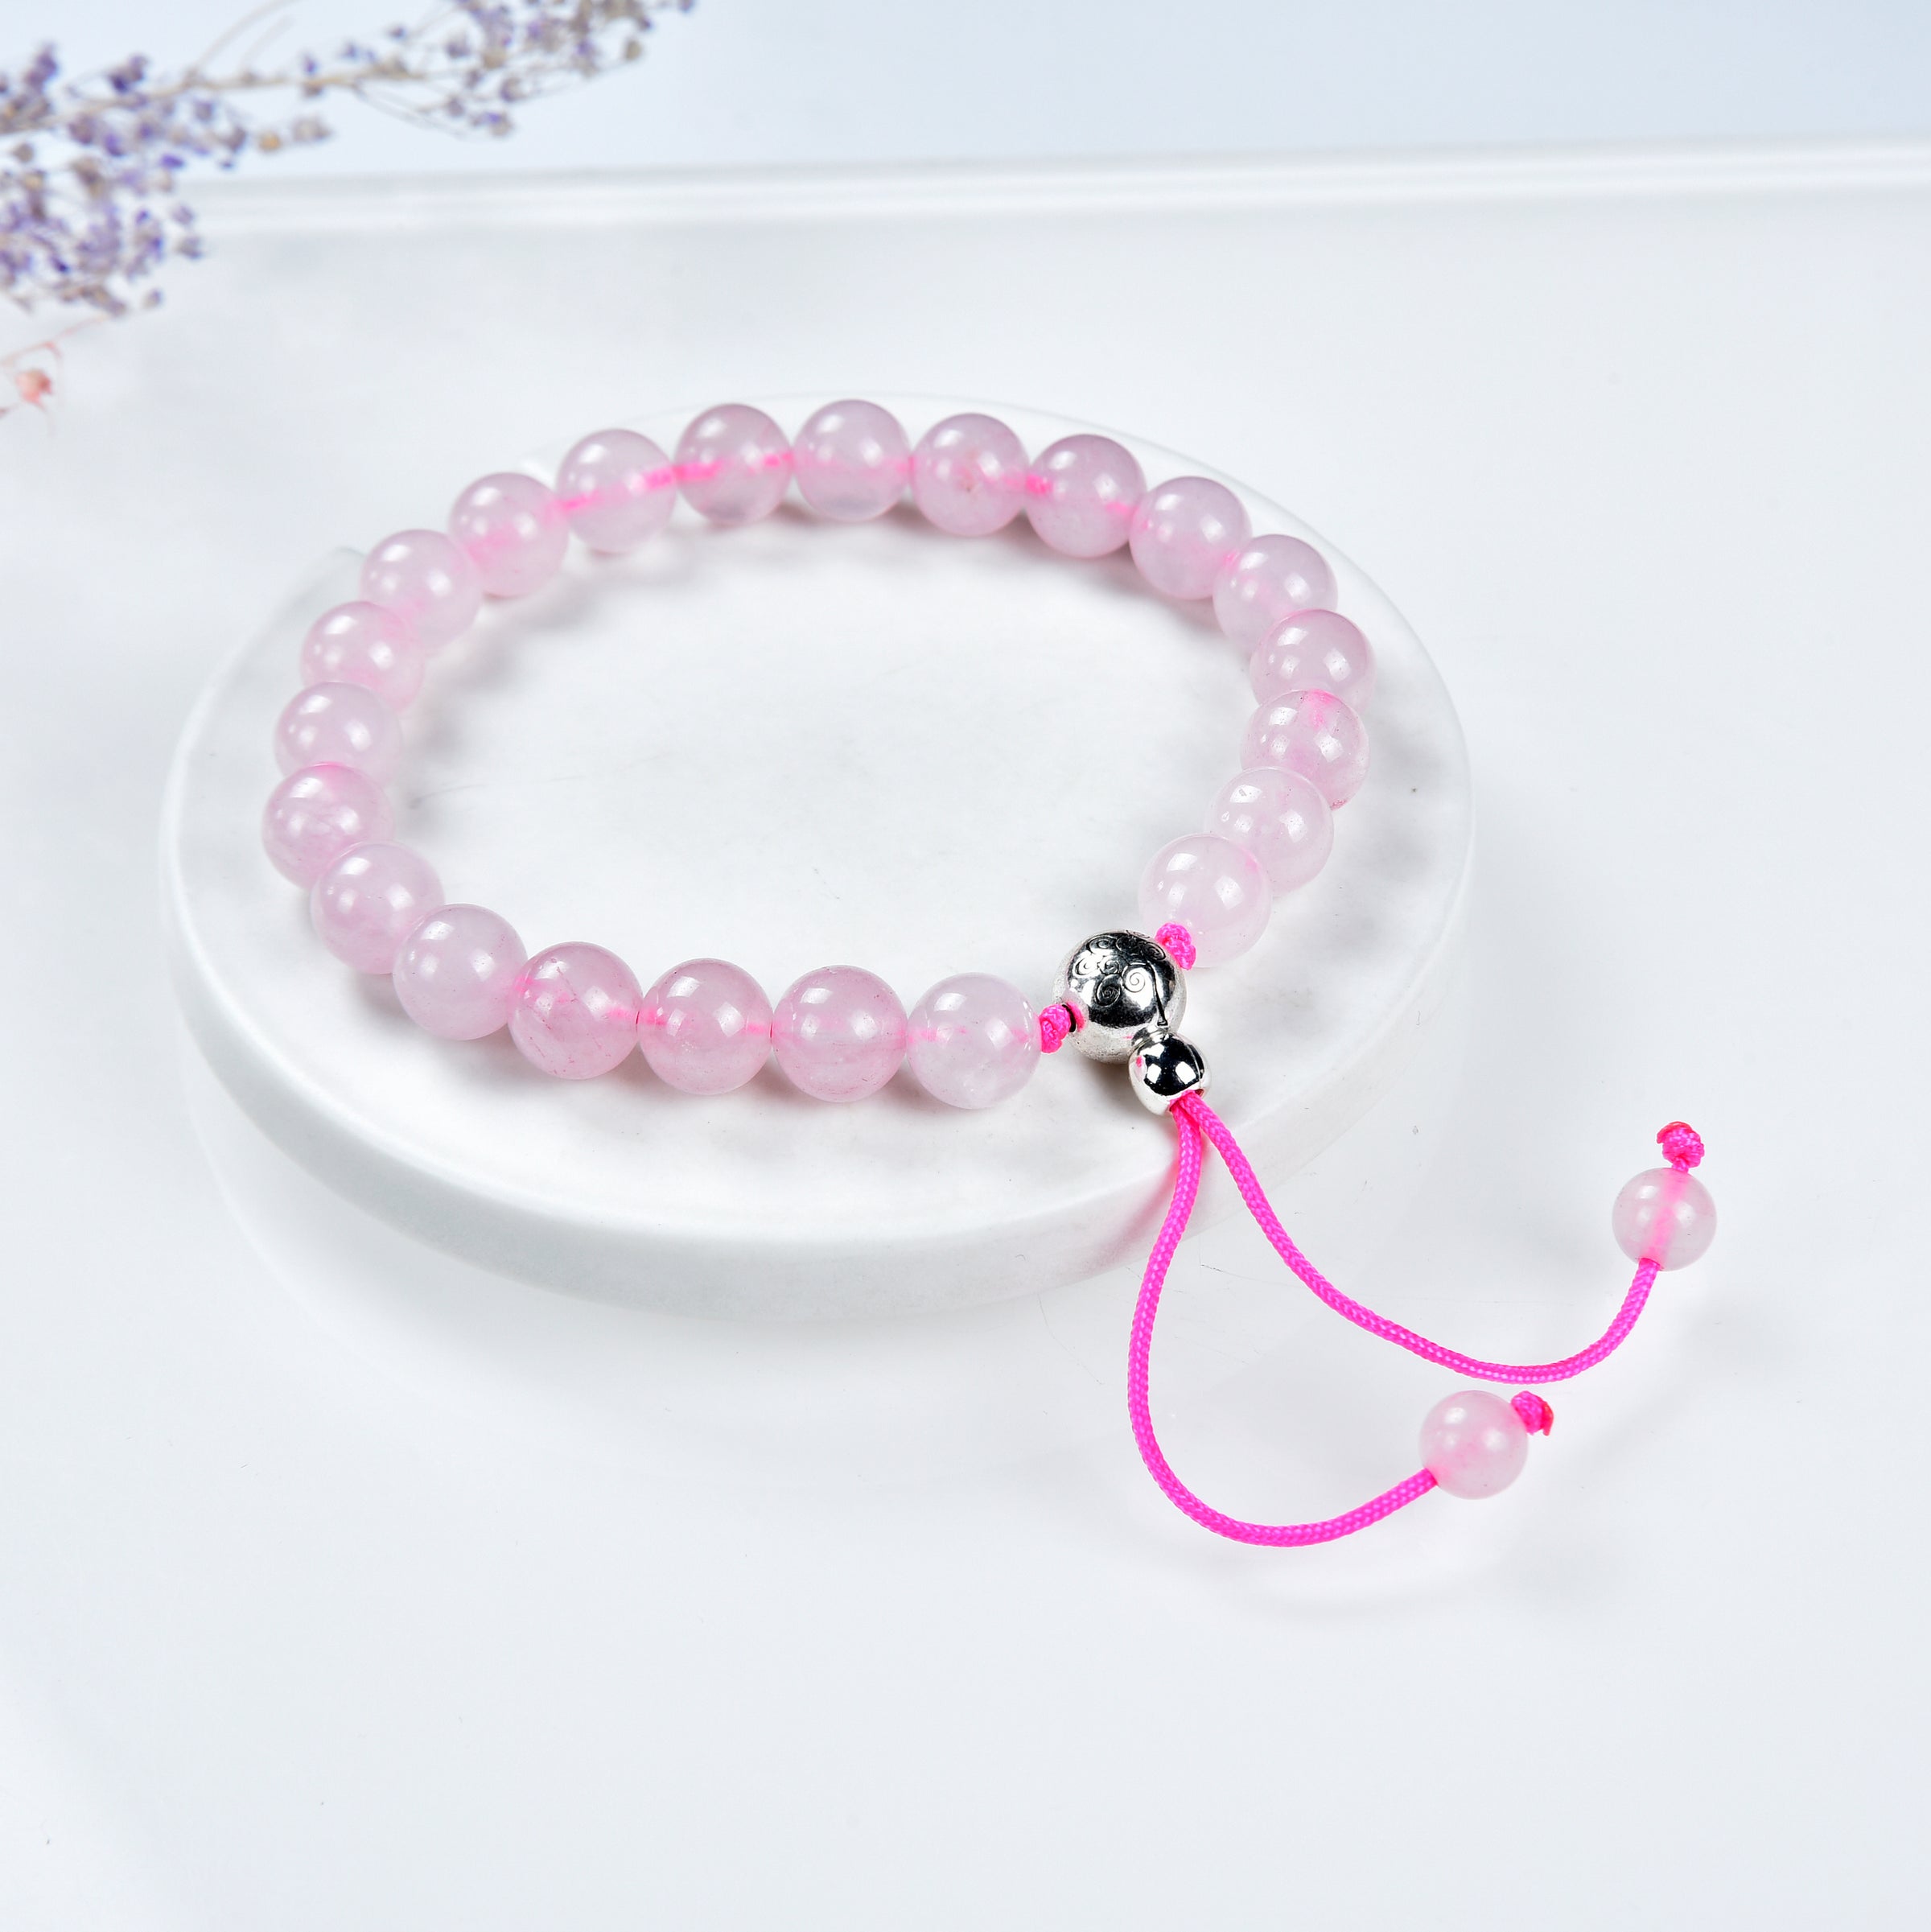 Mala Bracelet | 8mm Beads, Guru Bead, Durable Nylon Cord | Adjustable Length (Rose Quartz )